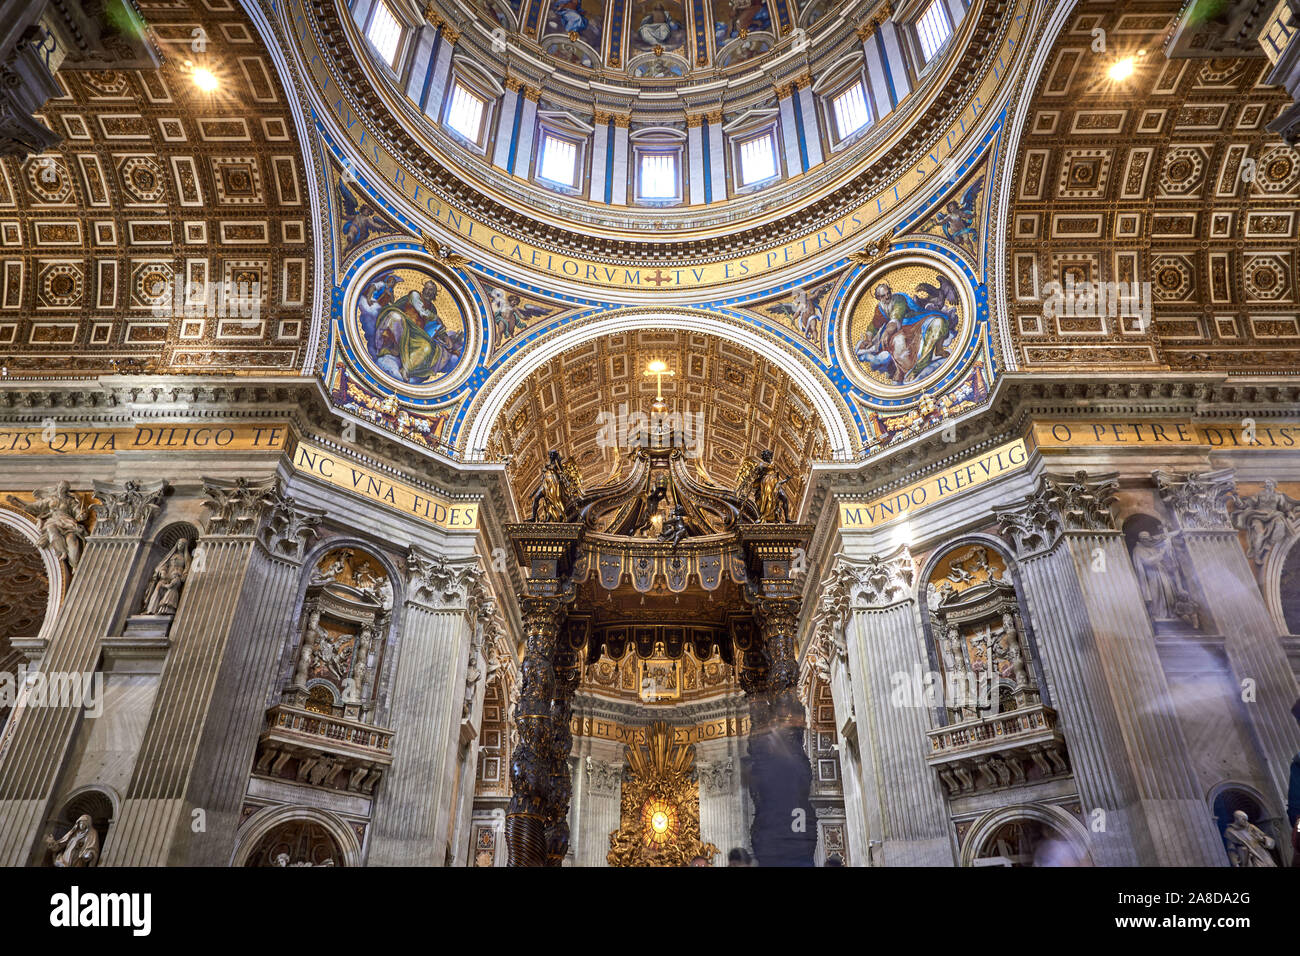 st Peter’s basilica interior Vatican City Rome Italy Stock Photo